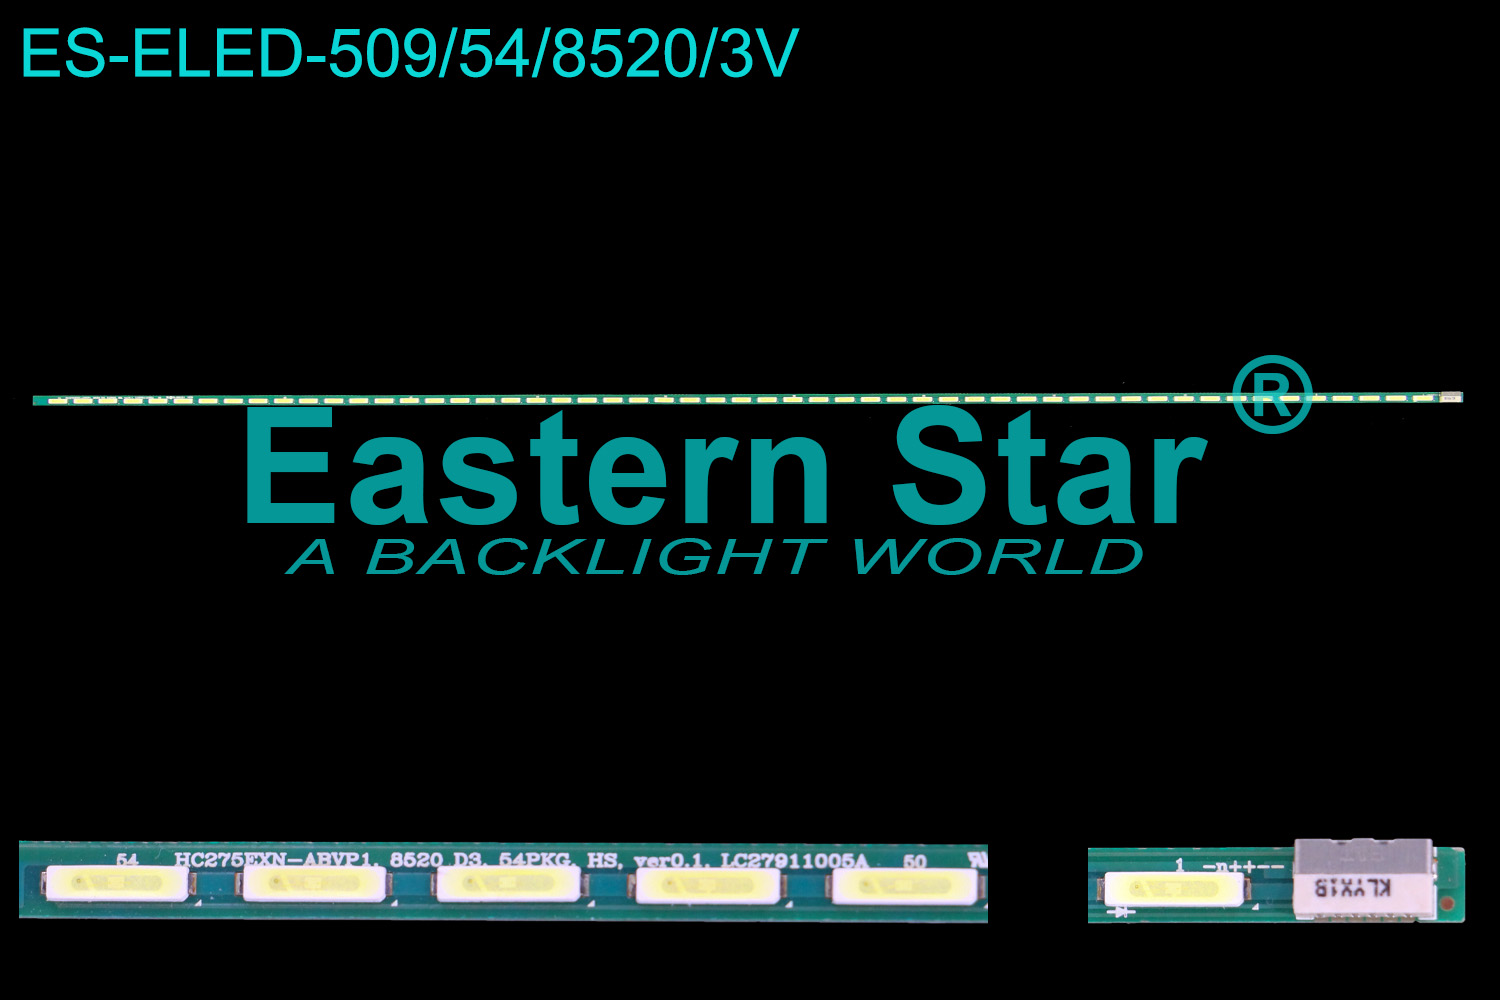 ES-ELED-509 ELED/EDGE TV backlight use for 28'' LG 28LK451V HC275EXN-ABYP1. 8520 D3, 54PKG, HS, VER0.1, LC27911005A LED STRIPS(1)